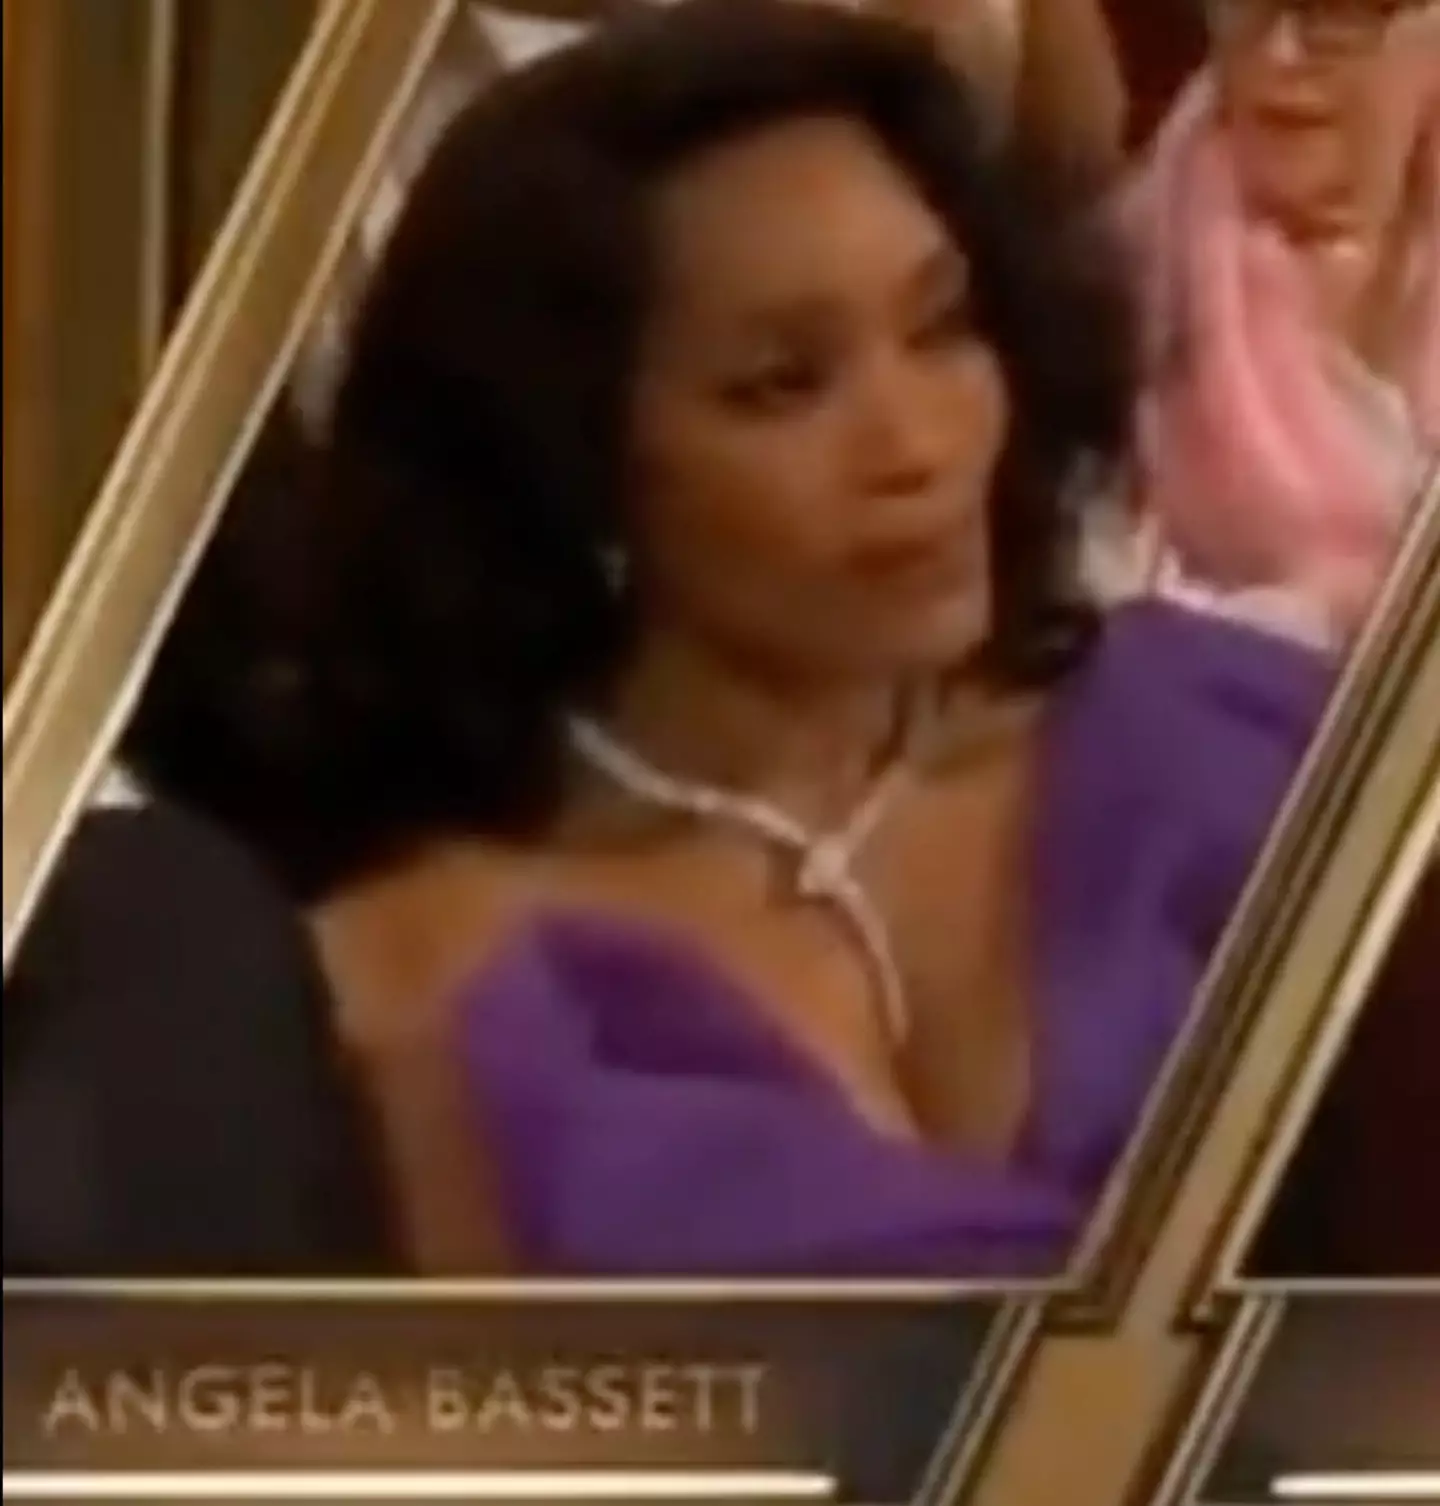 Angela Bassett was not happy.